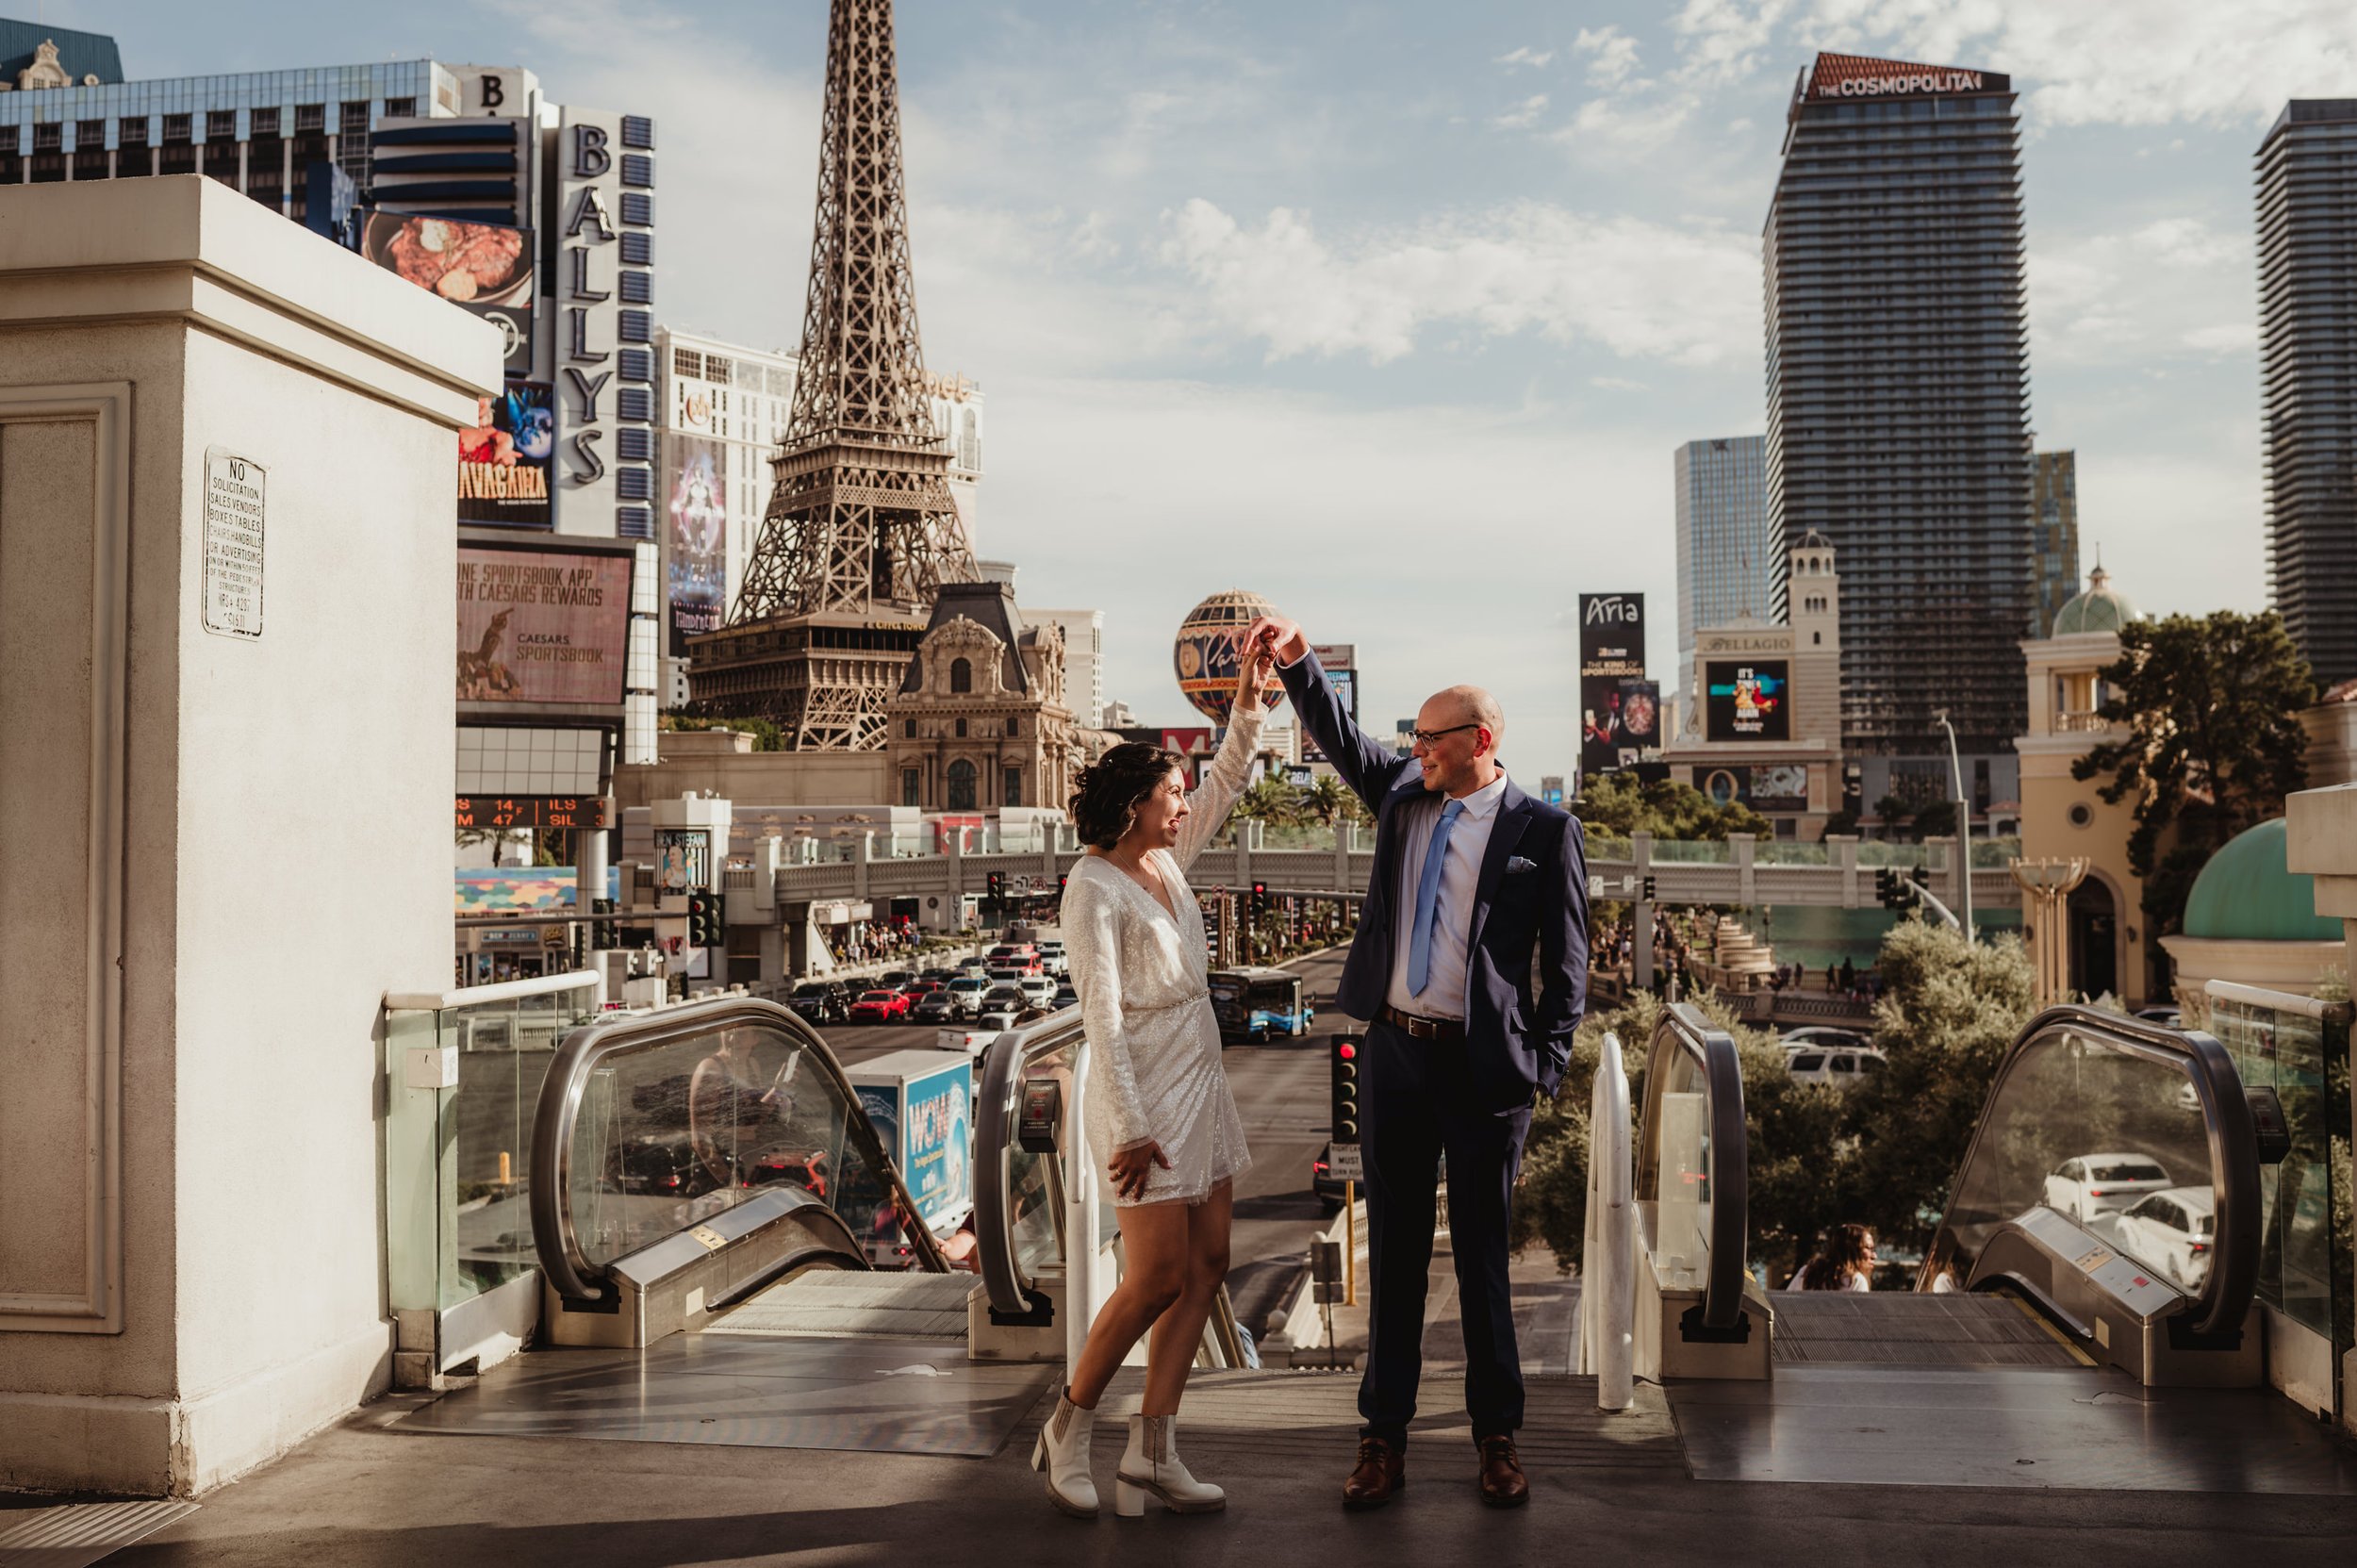 Eifel Tower Proposal - LV Wedding Connection